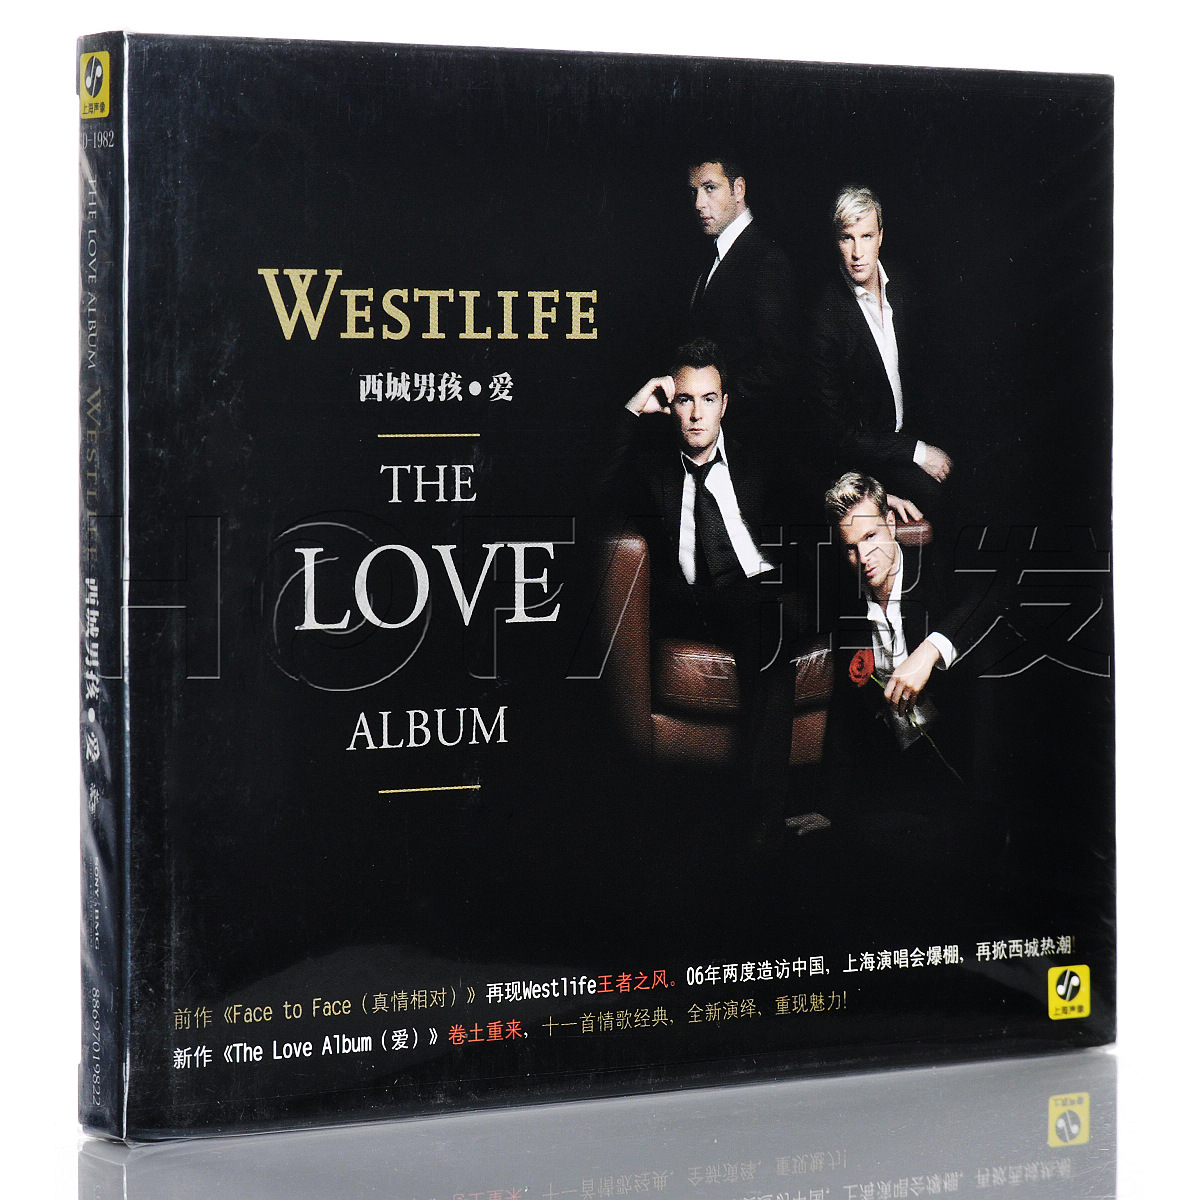 新索正版 Westlife西城男孩 The Love Album爱专辑CD